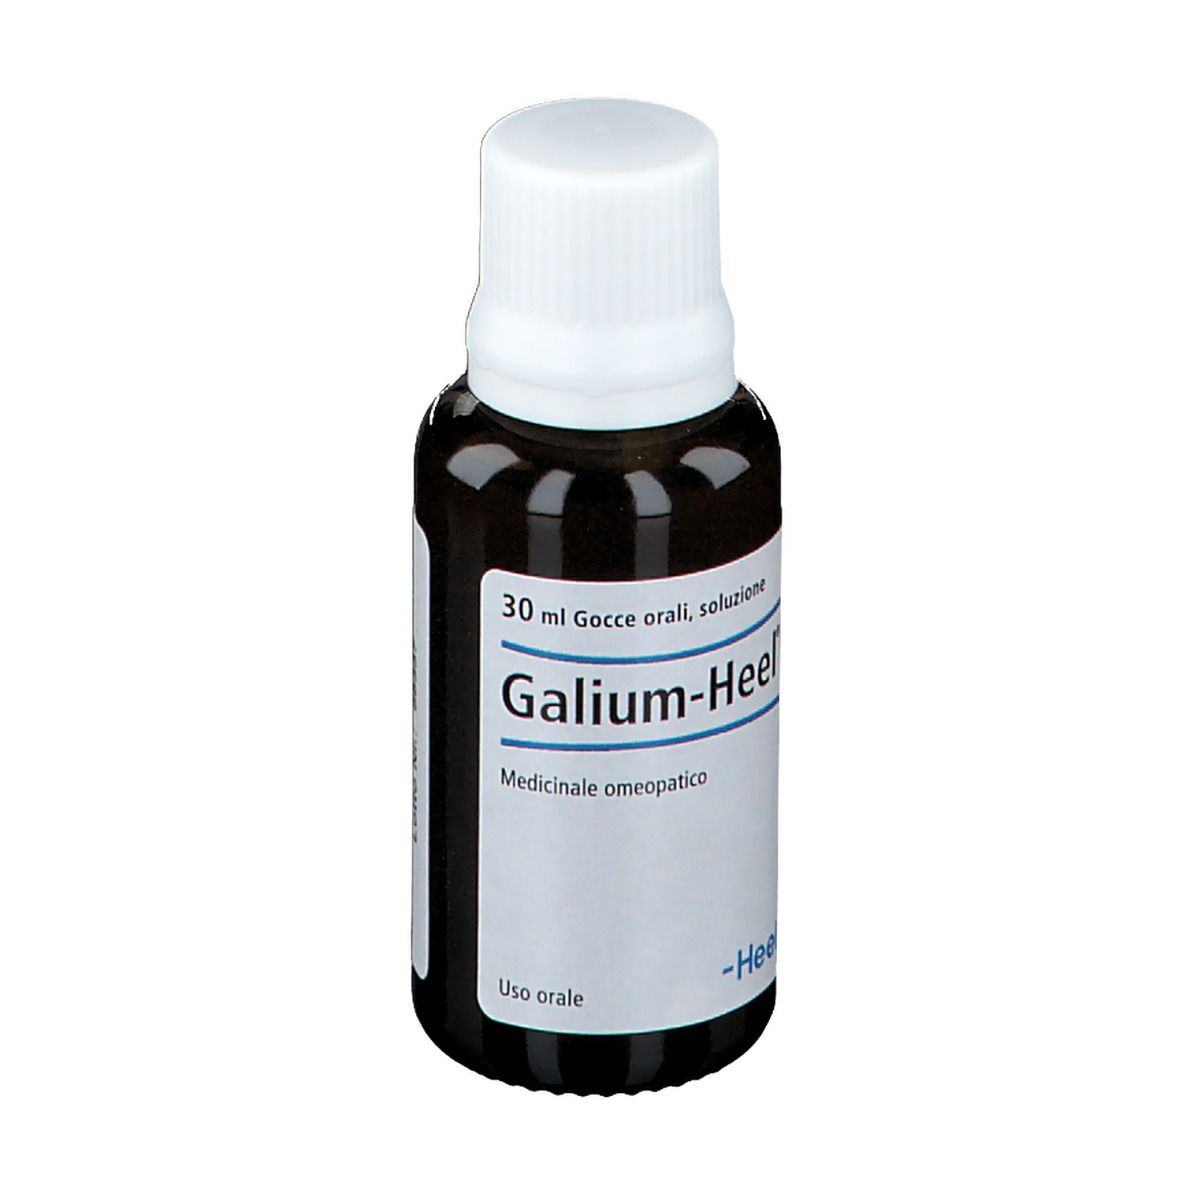 Galium-Heel®